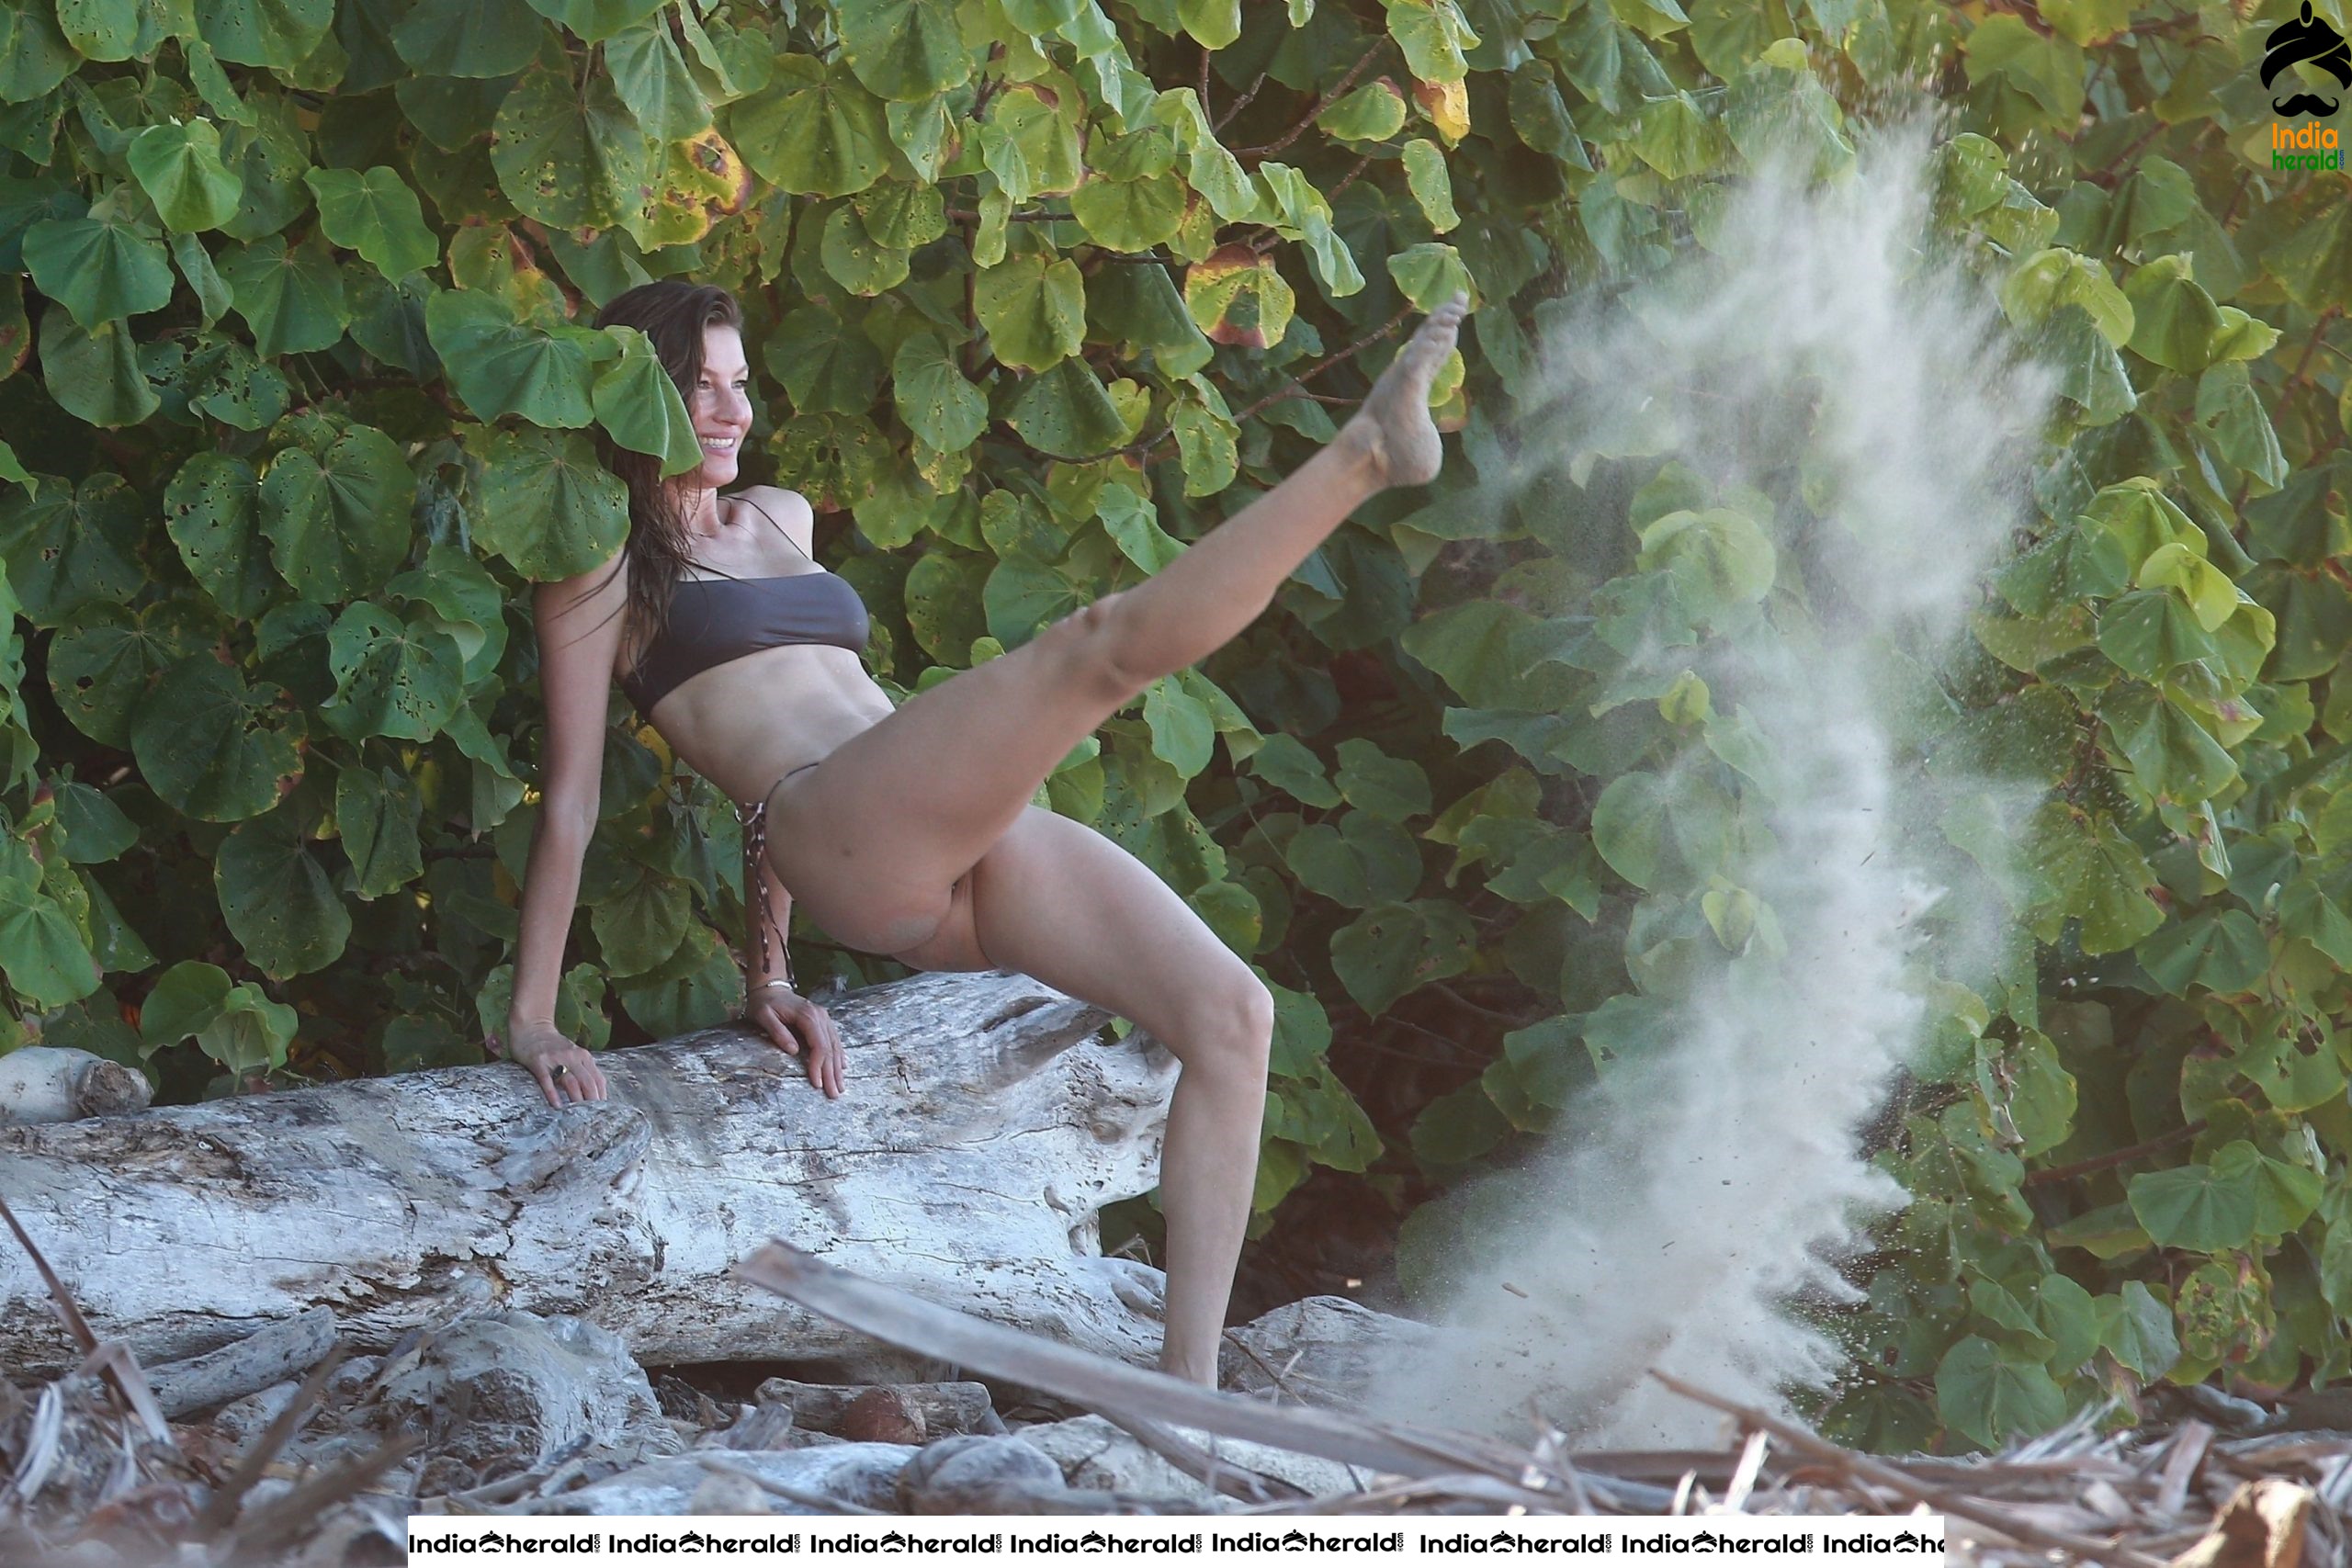 Gisele Bundchen during a Bikini photo shoot on the beach in Costa Rica Set 1